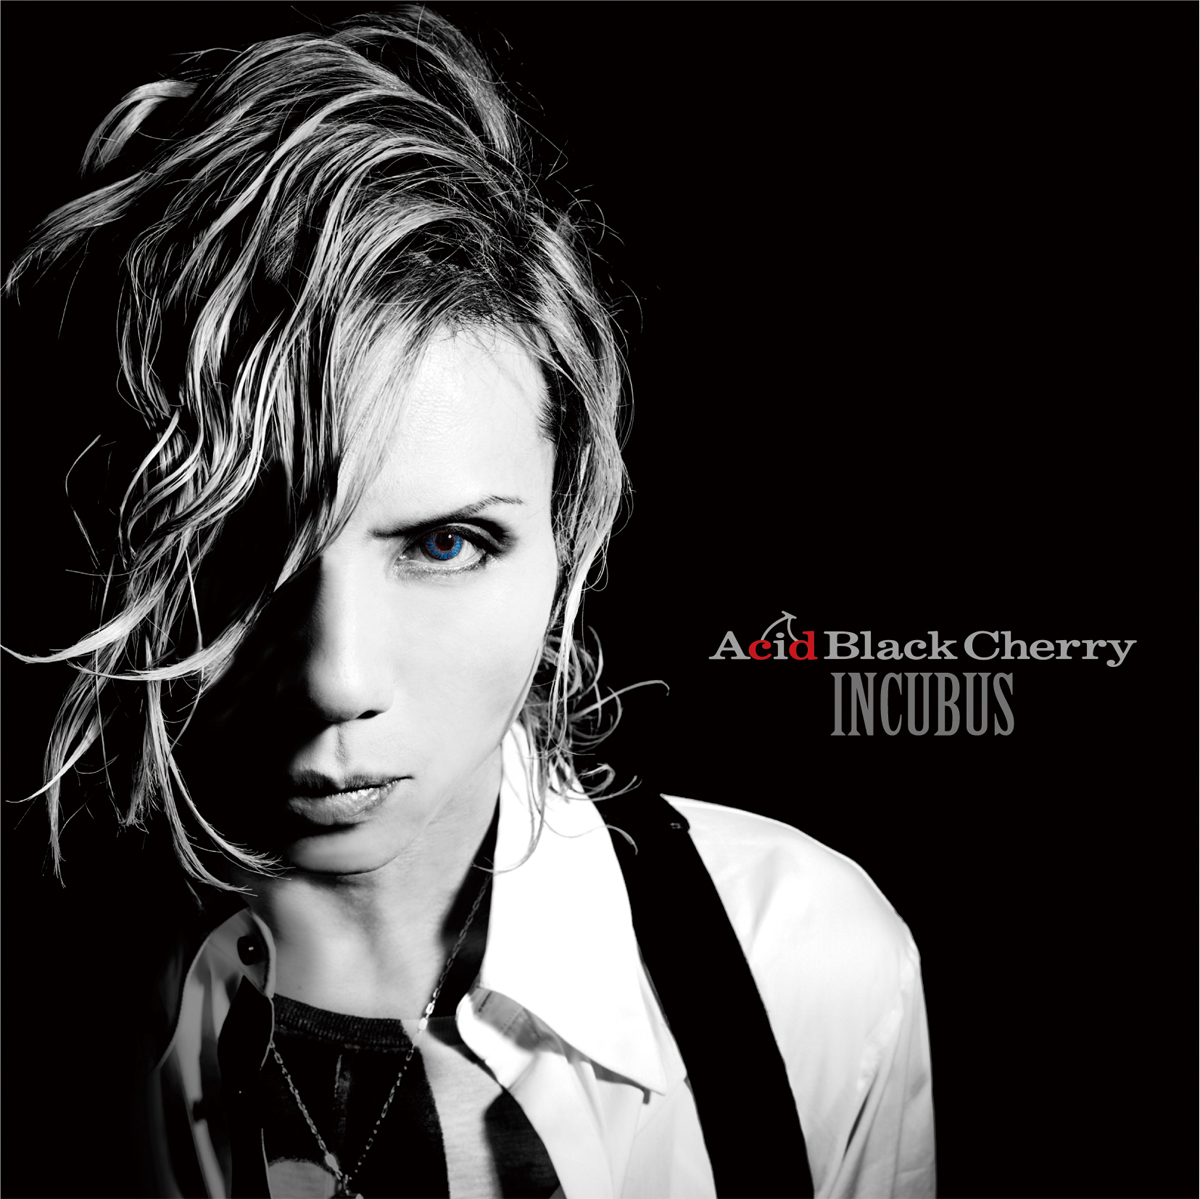 Acid Black Cherry ニューシングルのジャケット写真解禁 Rockの総合情報サイトvif